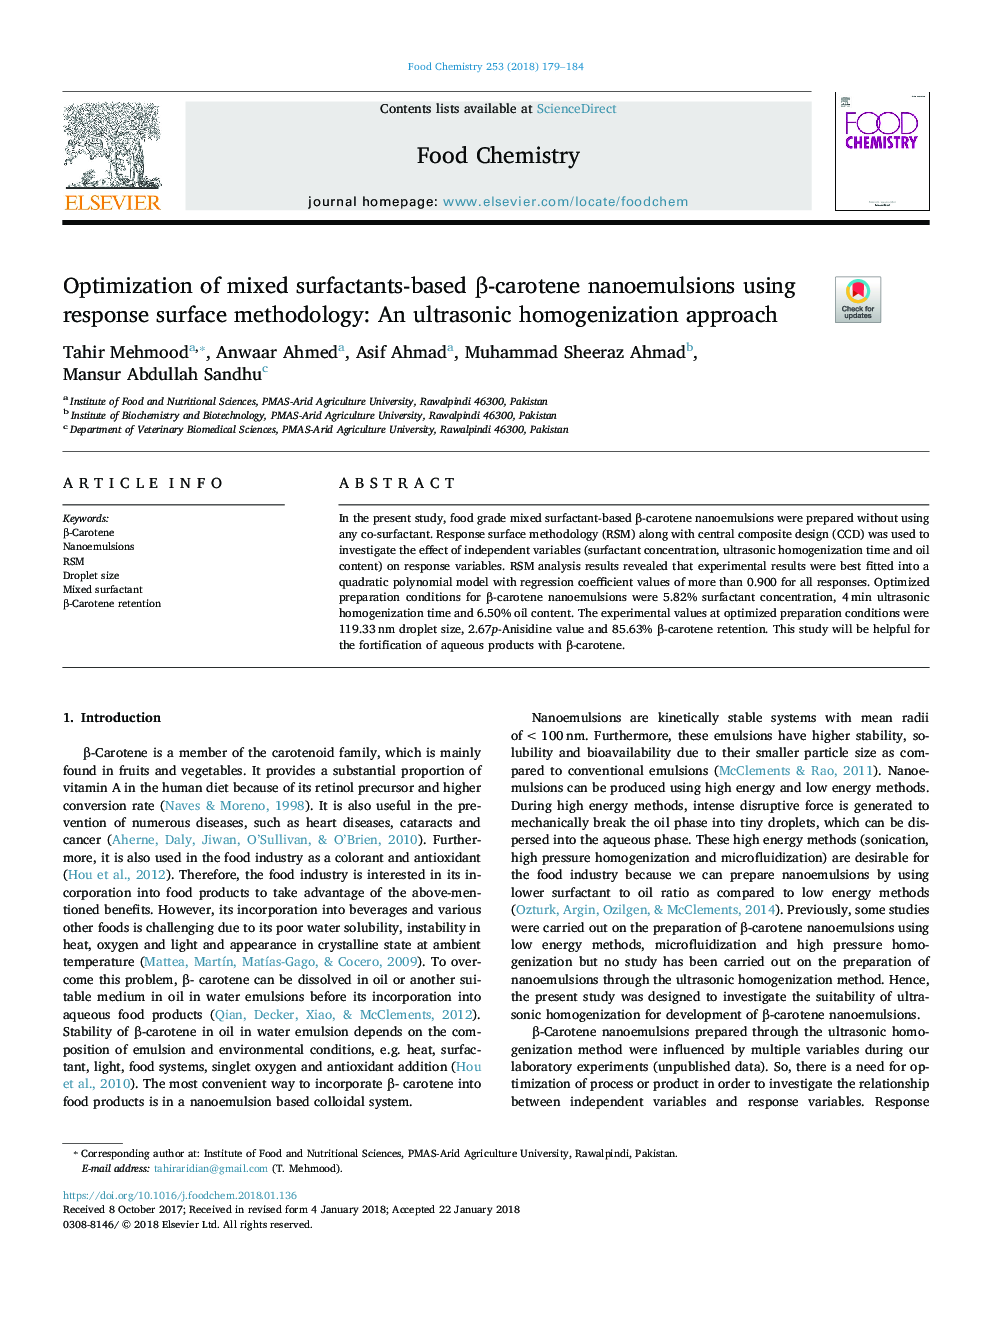 Optimization of mixed surfactants-based Î²-carotene nanoemulsions using response surface methodology: An ultrasonic homogenization approach